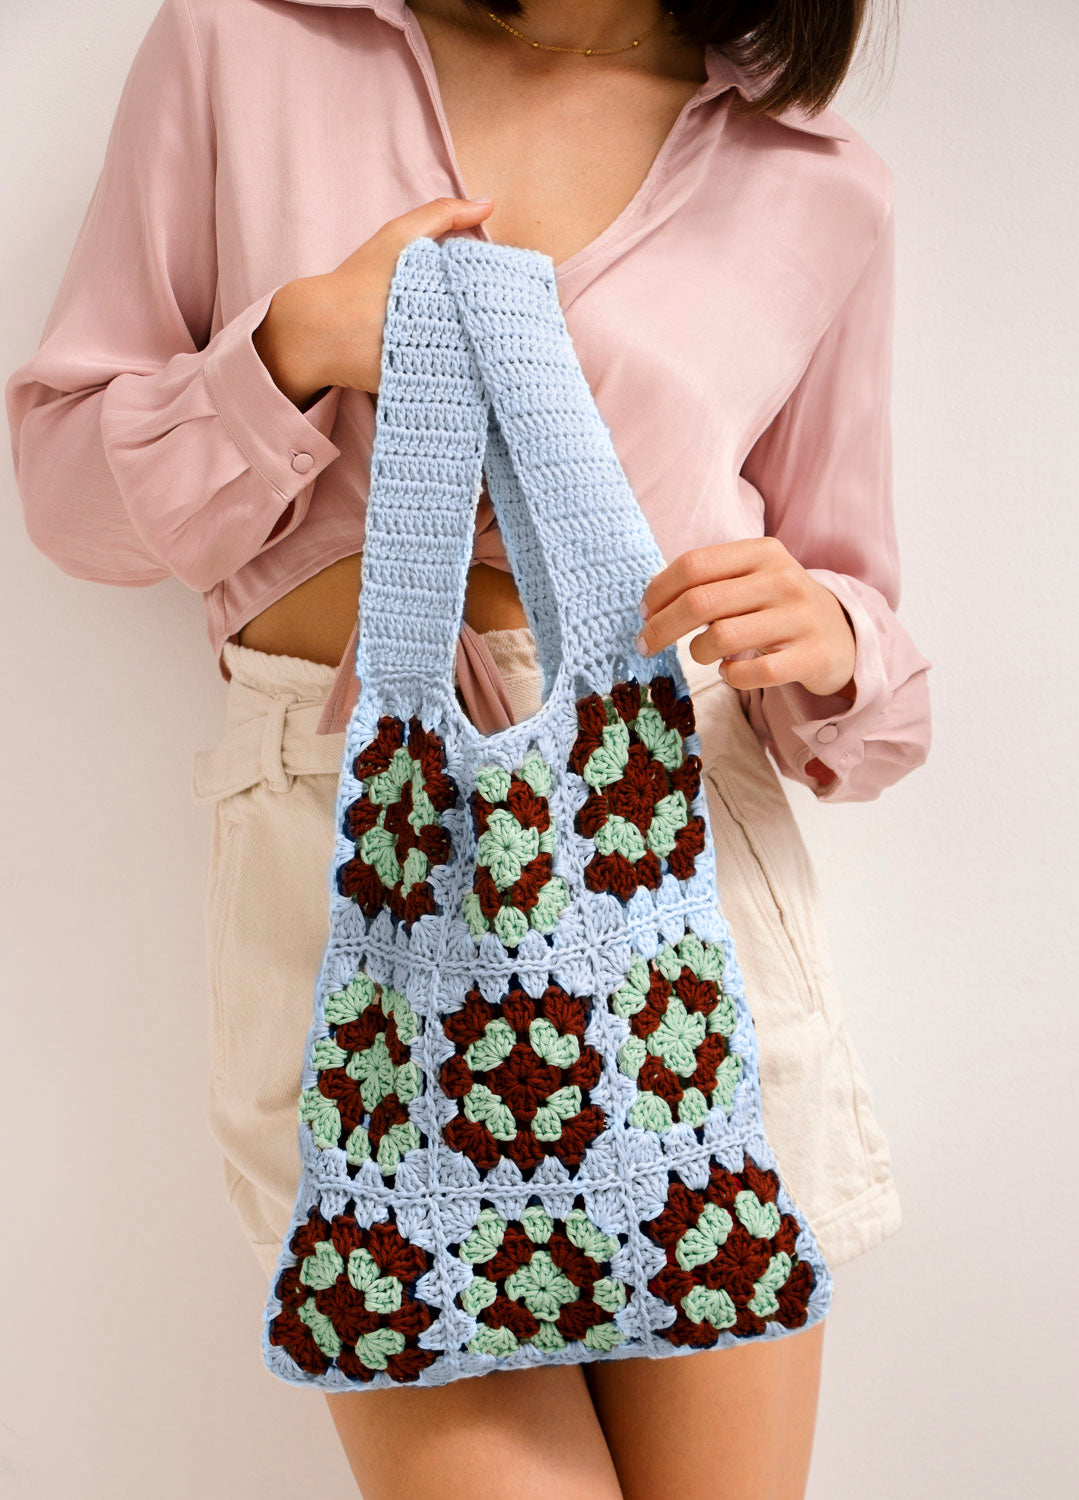 Tote Bag: Knitflix & Chill – weareknitters